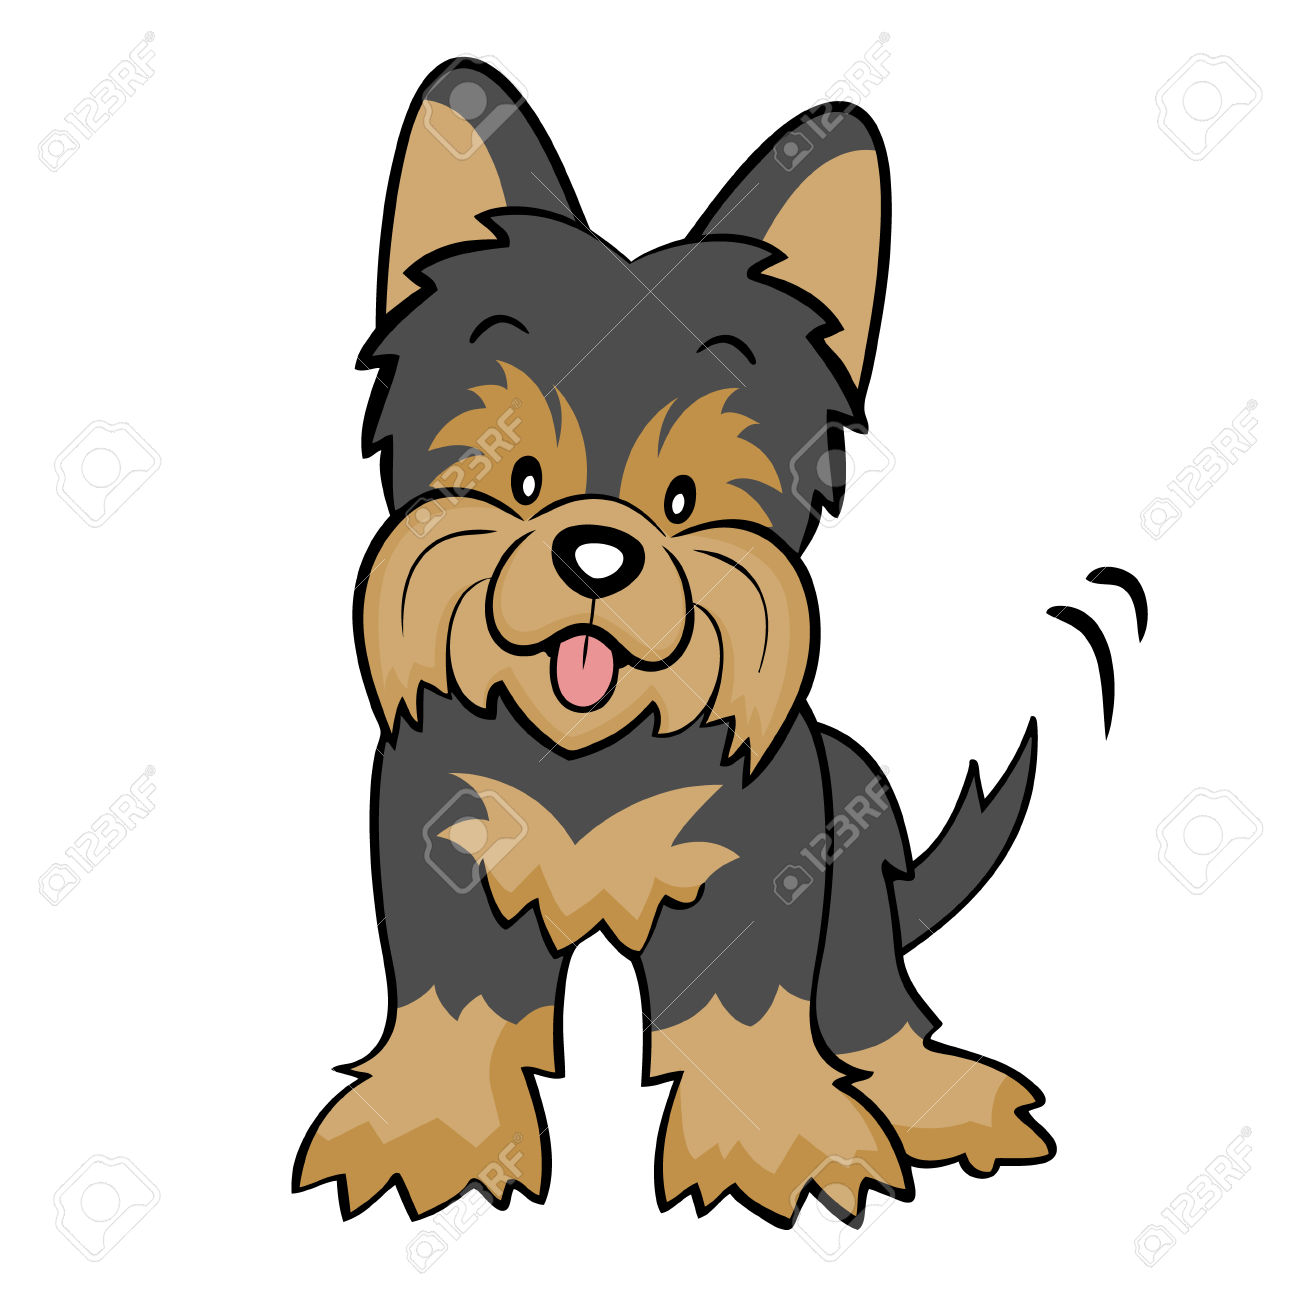 Yrokshire Terrier clipart #17, Download drawings